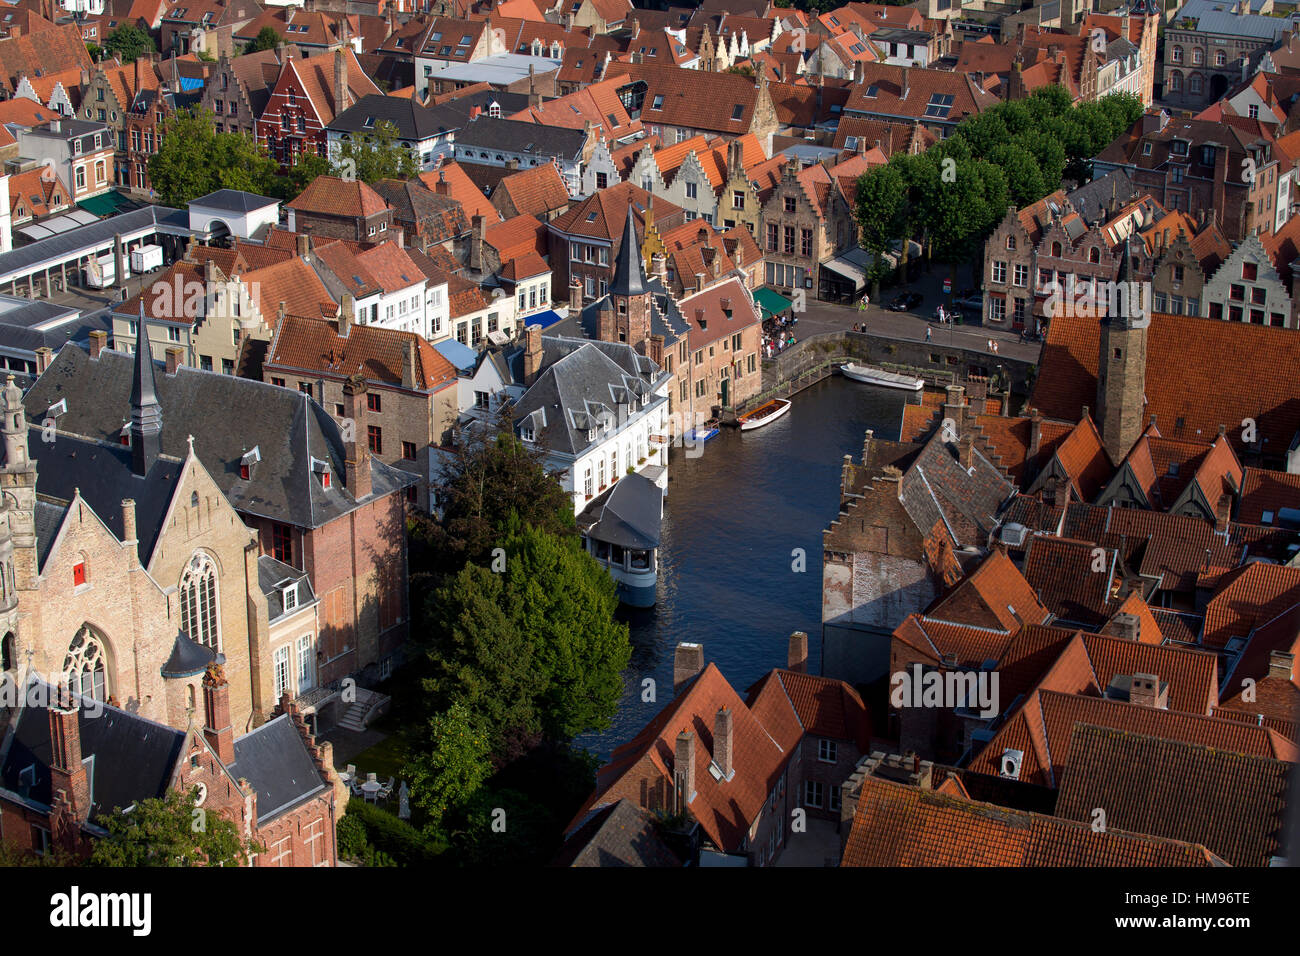 Rozenhoedkaai visto dalla parte superiore della torre campanaria Belfort (torre), Bruges, Fiandre Occidentali, Belgio Foto Stock